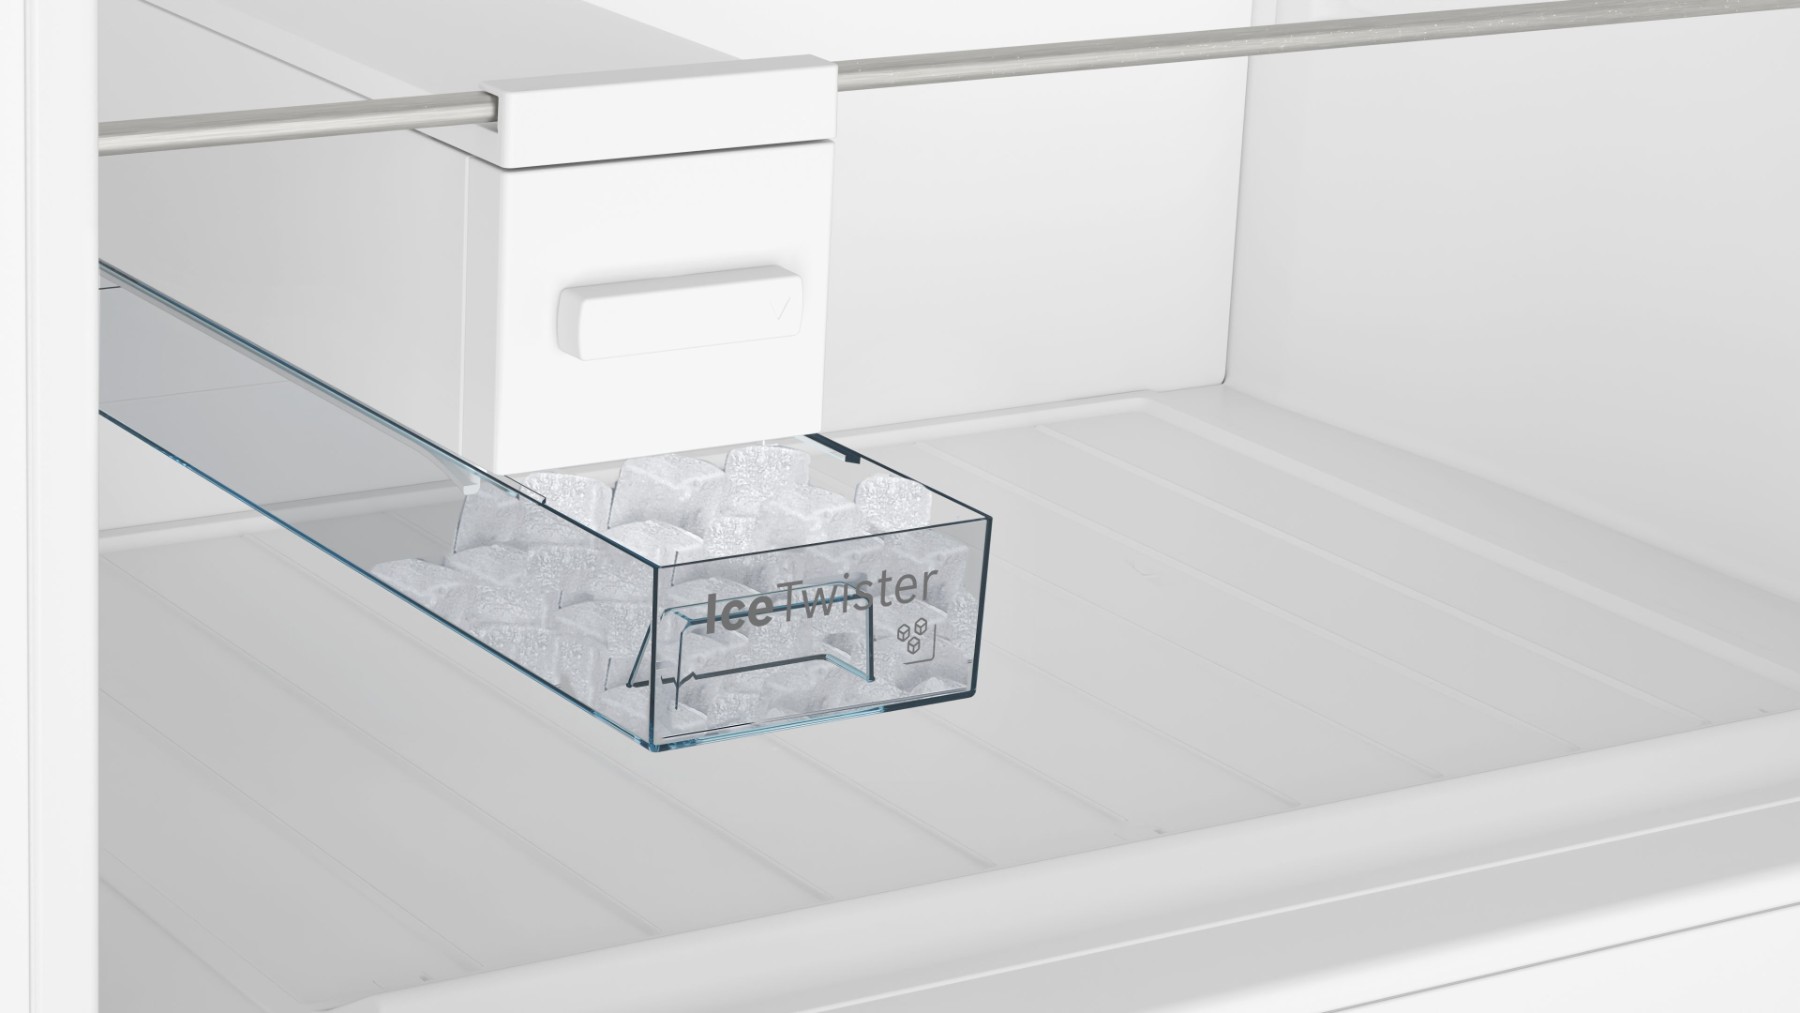 KDN56AWF0N Serie | 6 Üstten Donduruculu Buzdolabı 193 x 70 cm Beyaz